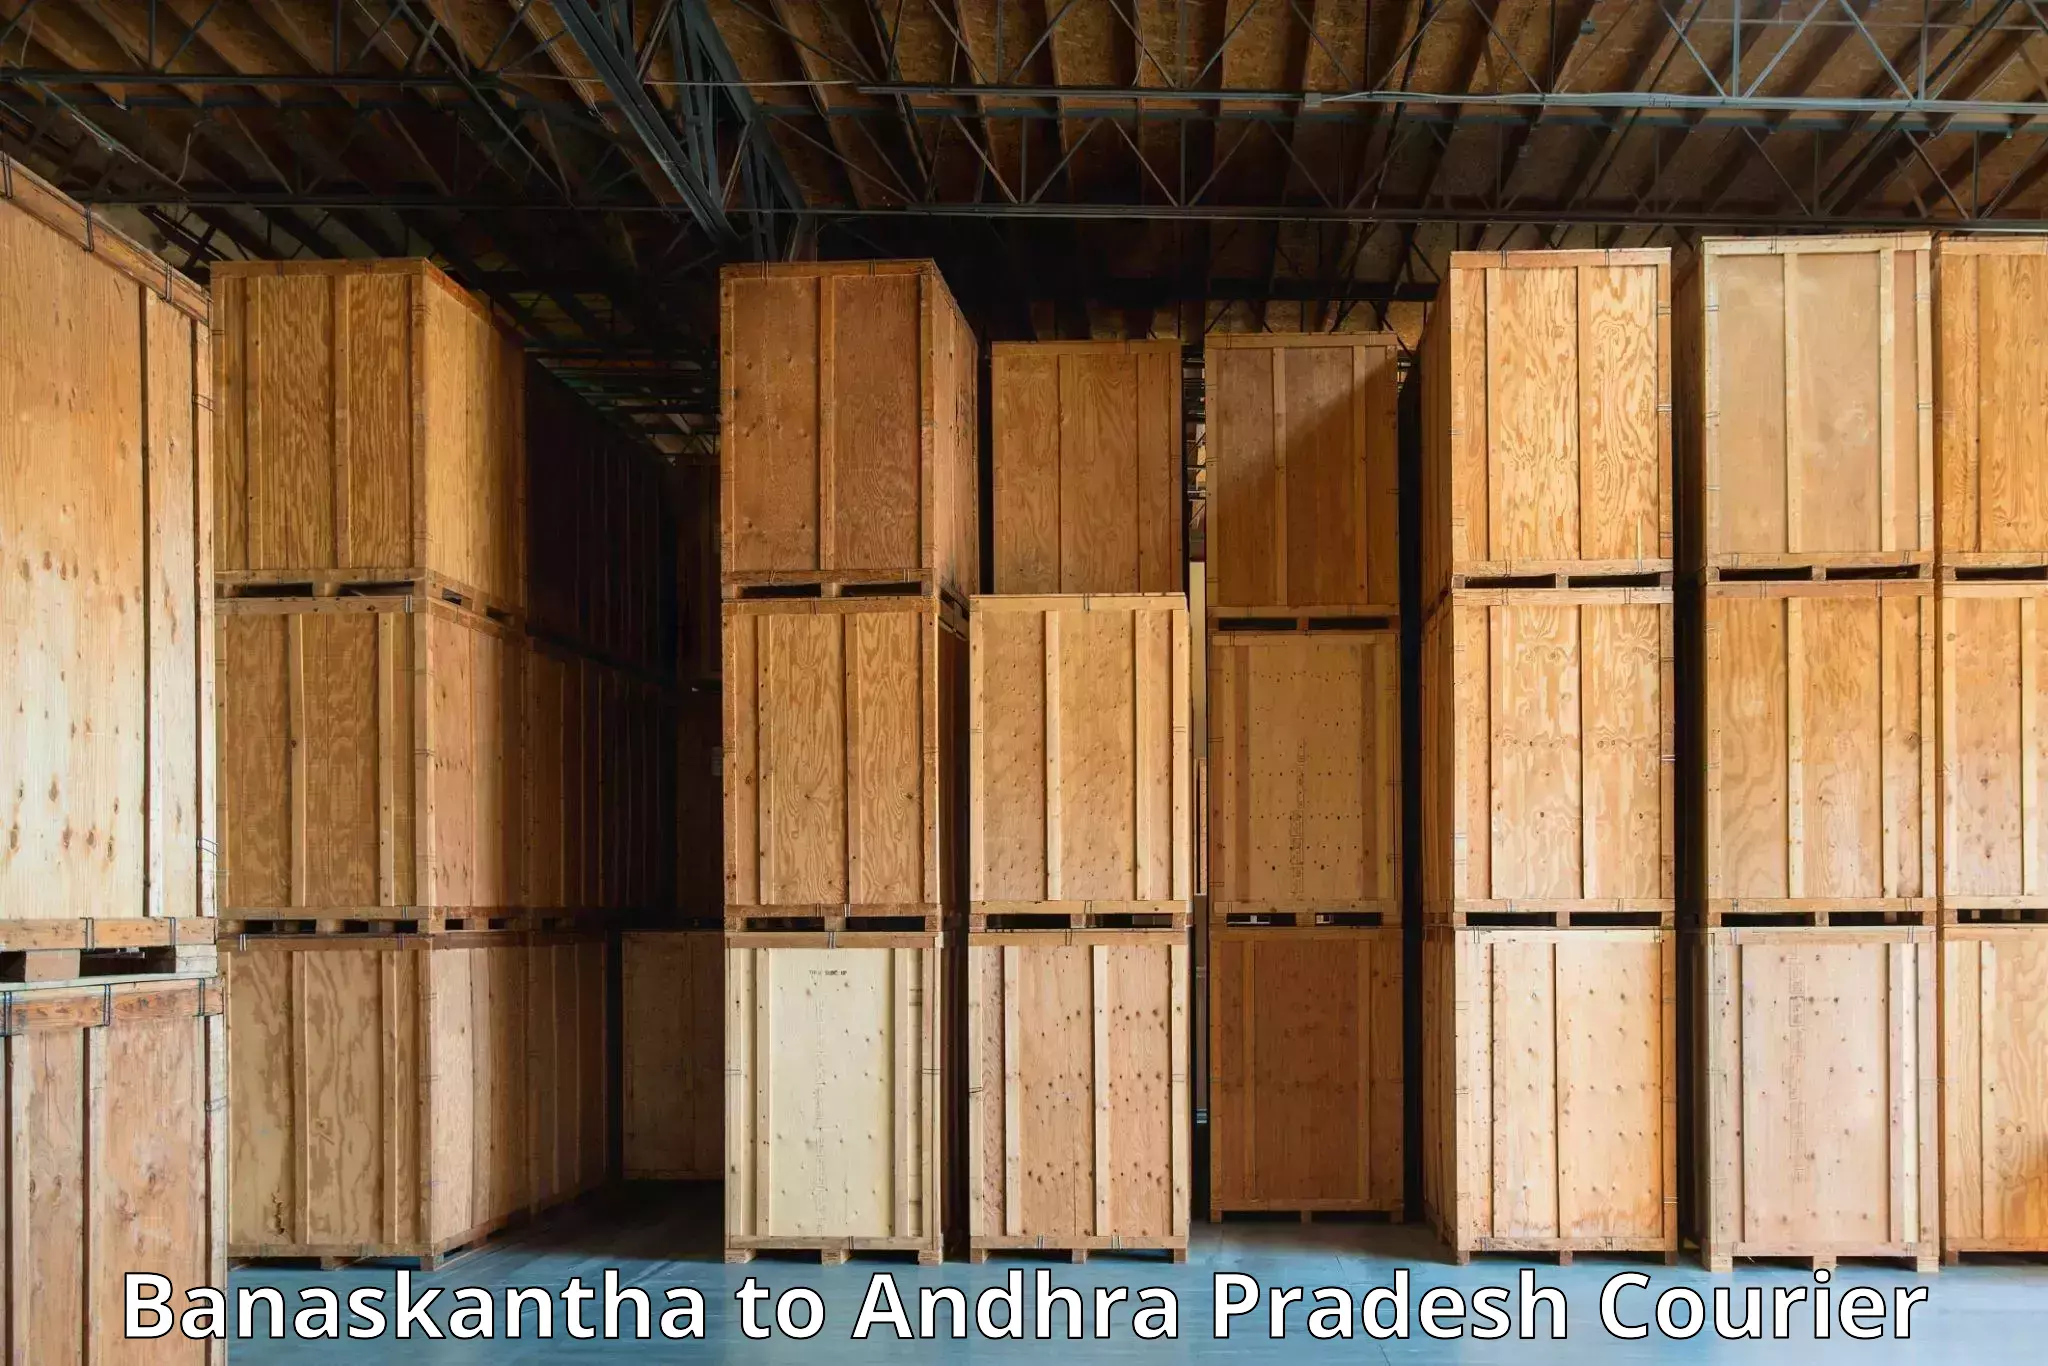 Next-day delivery options Banaskantha to Samarlakota